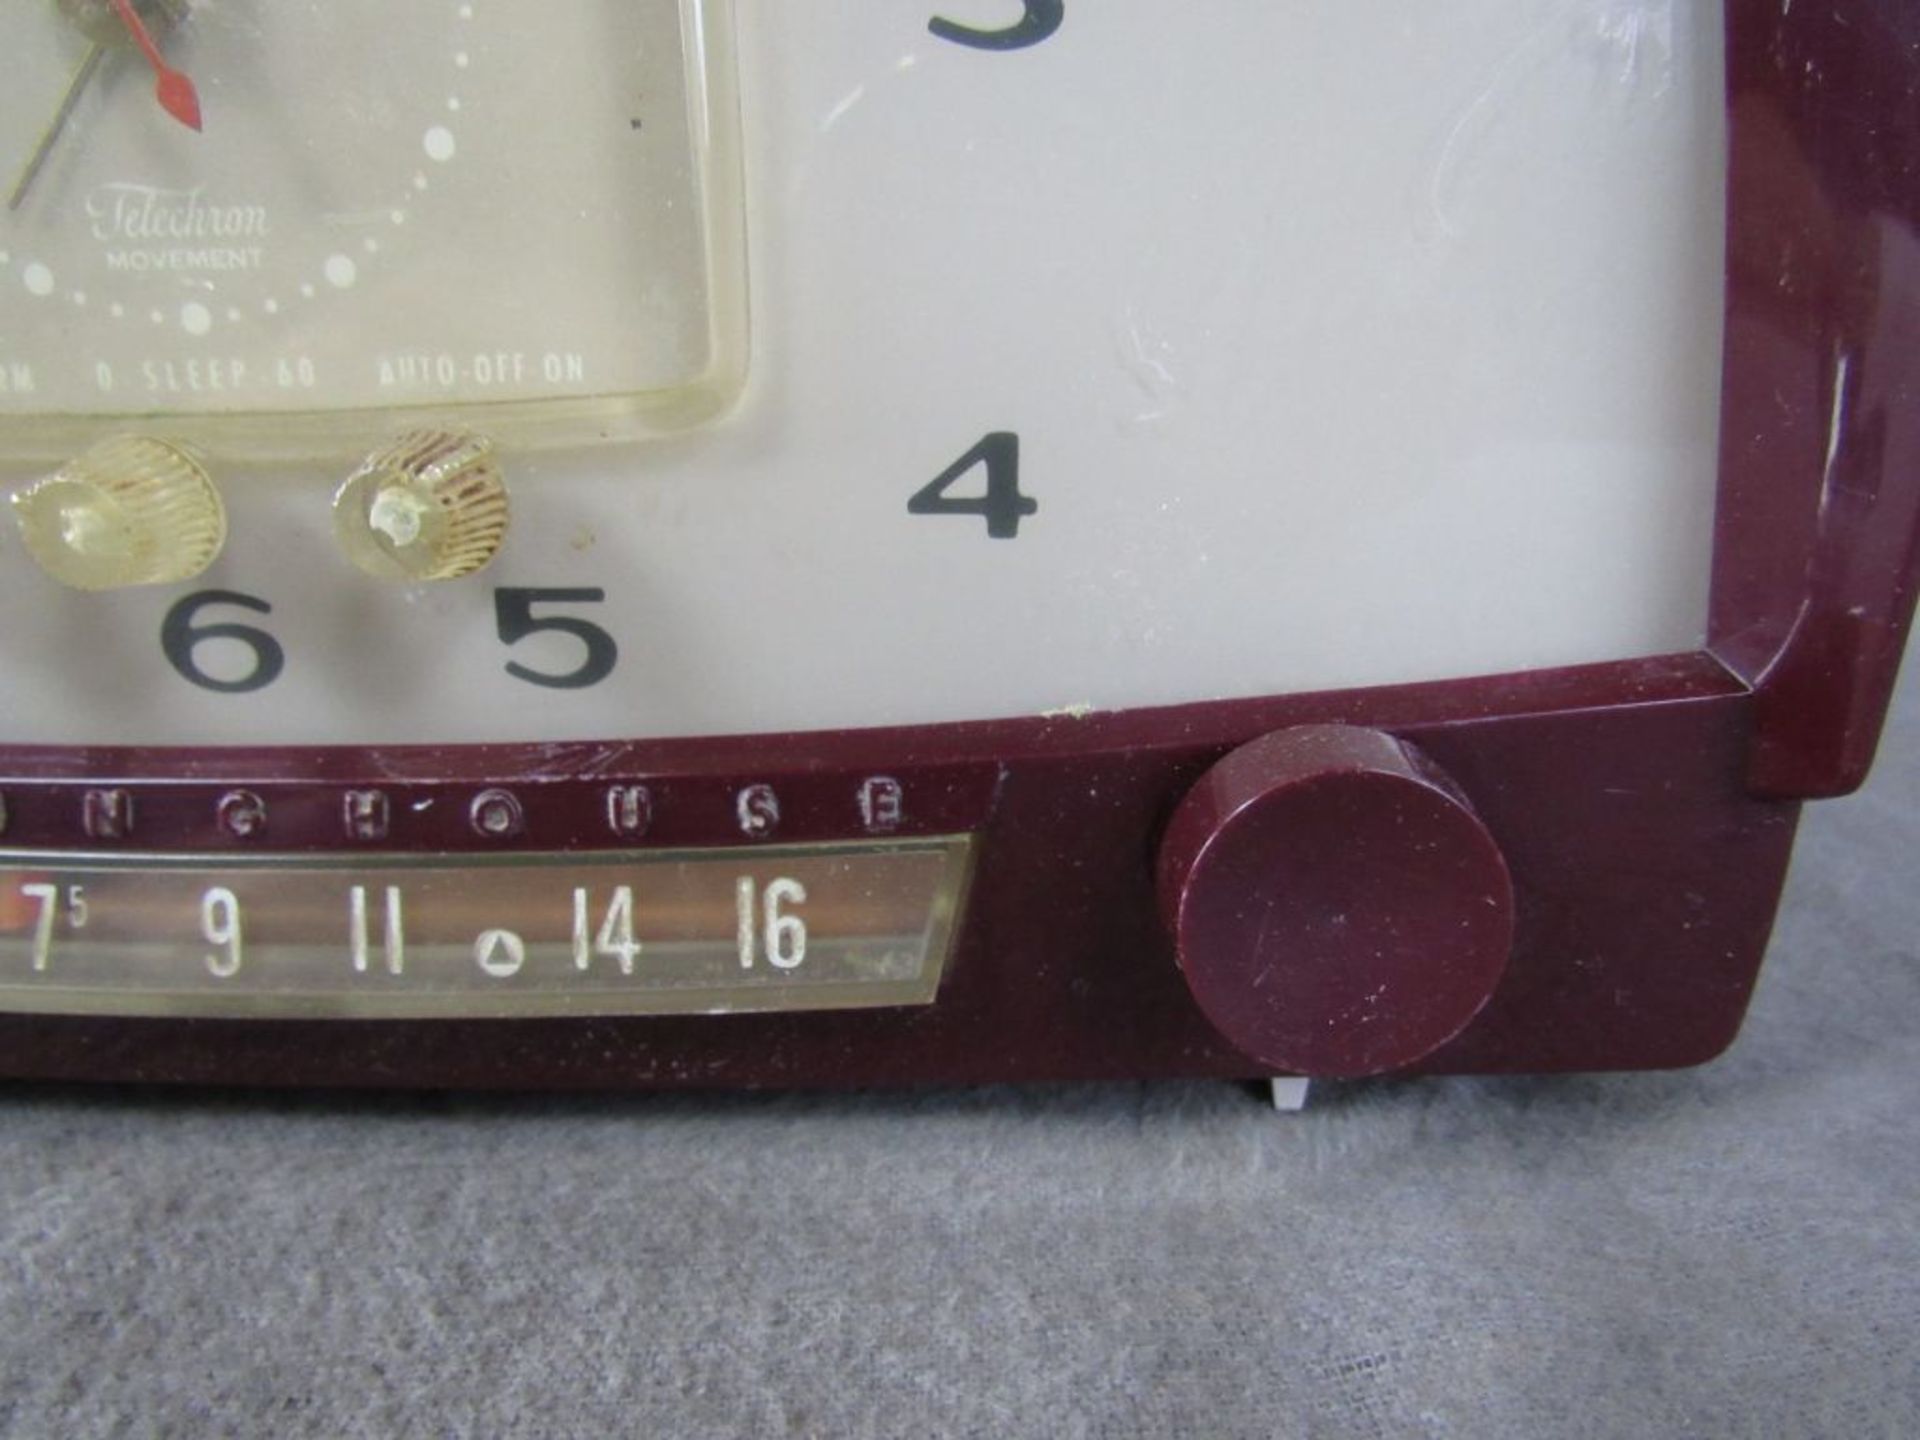 Westinghouse US Radio 50er Jahre Modell H-547T5 Breite:25cm - Image 3 of 4